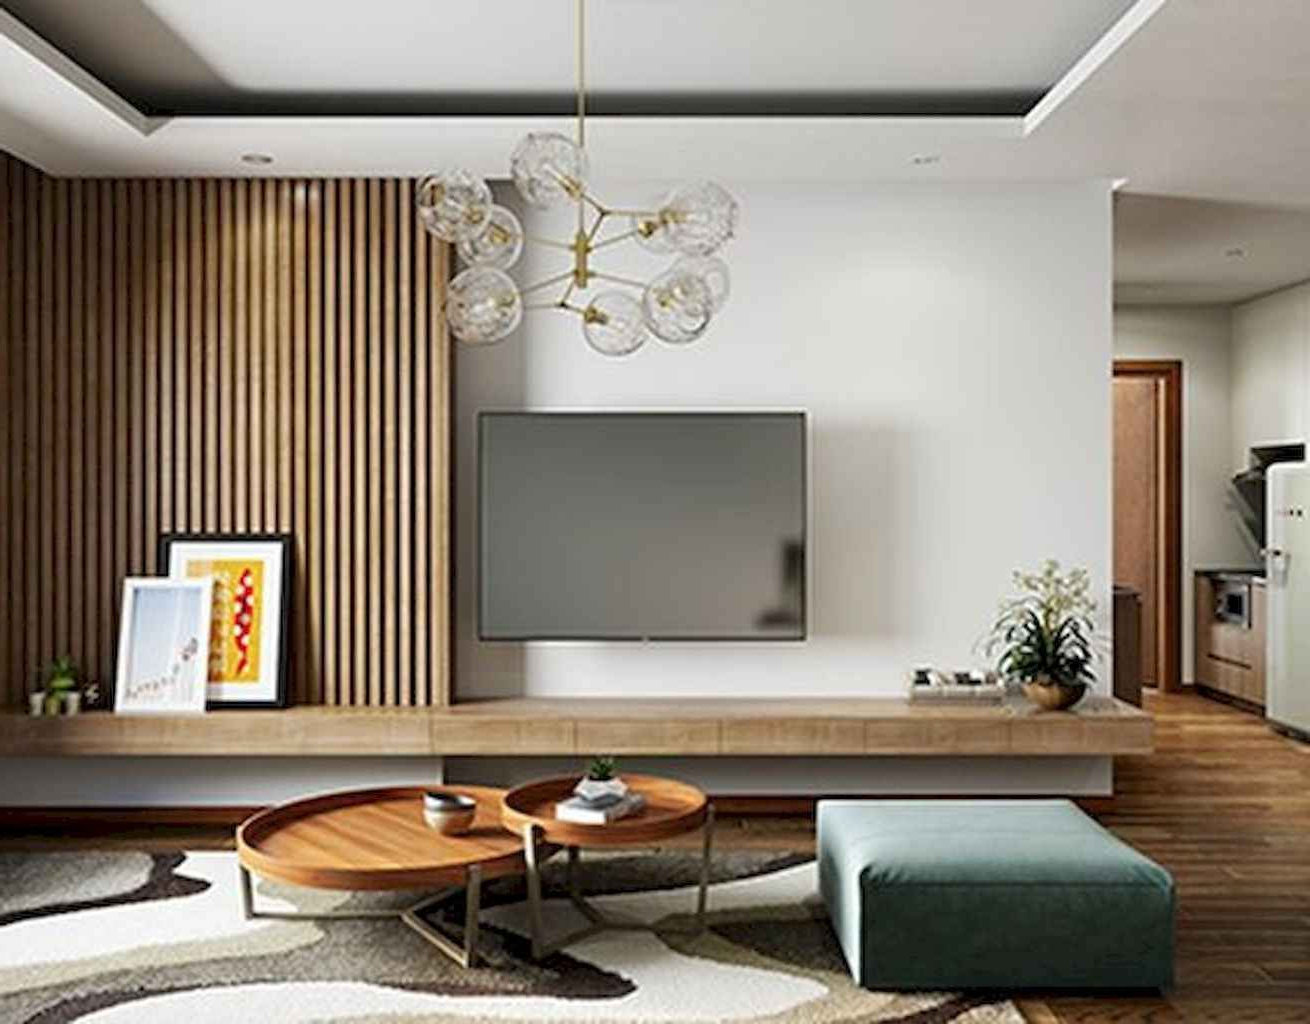 Adorable Modern Living Room 2019 65 Cozy Living Room